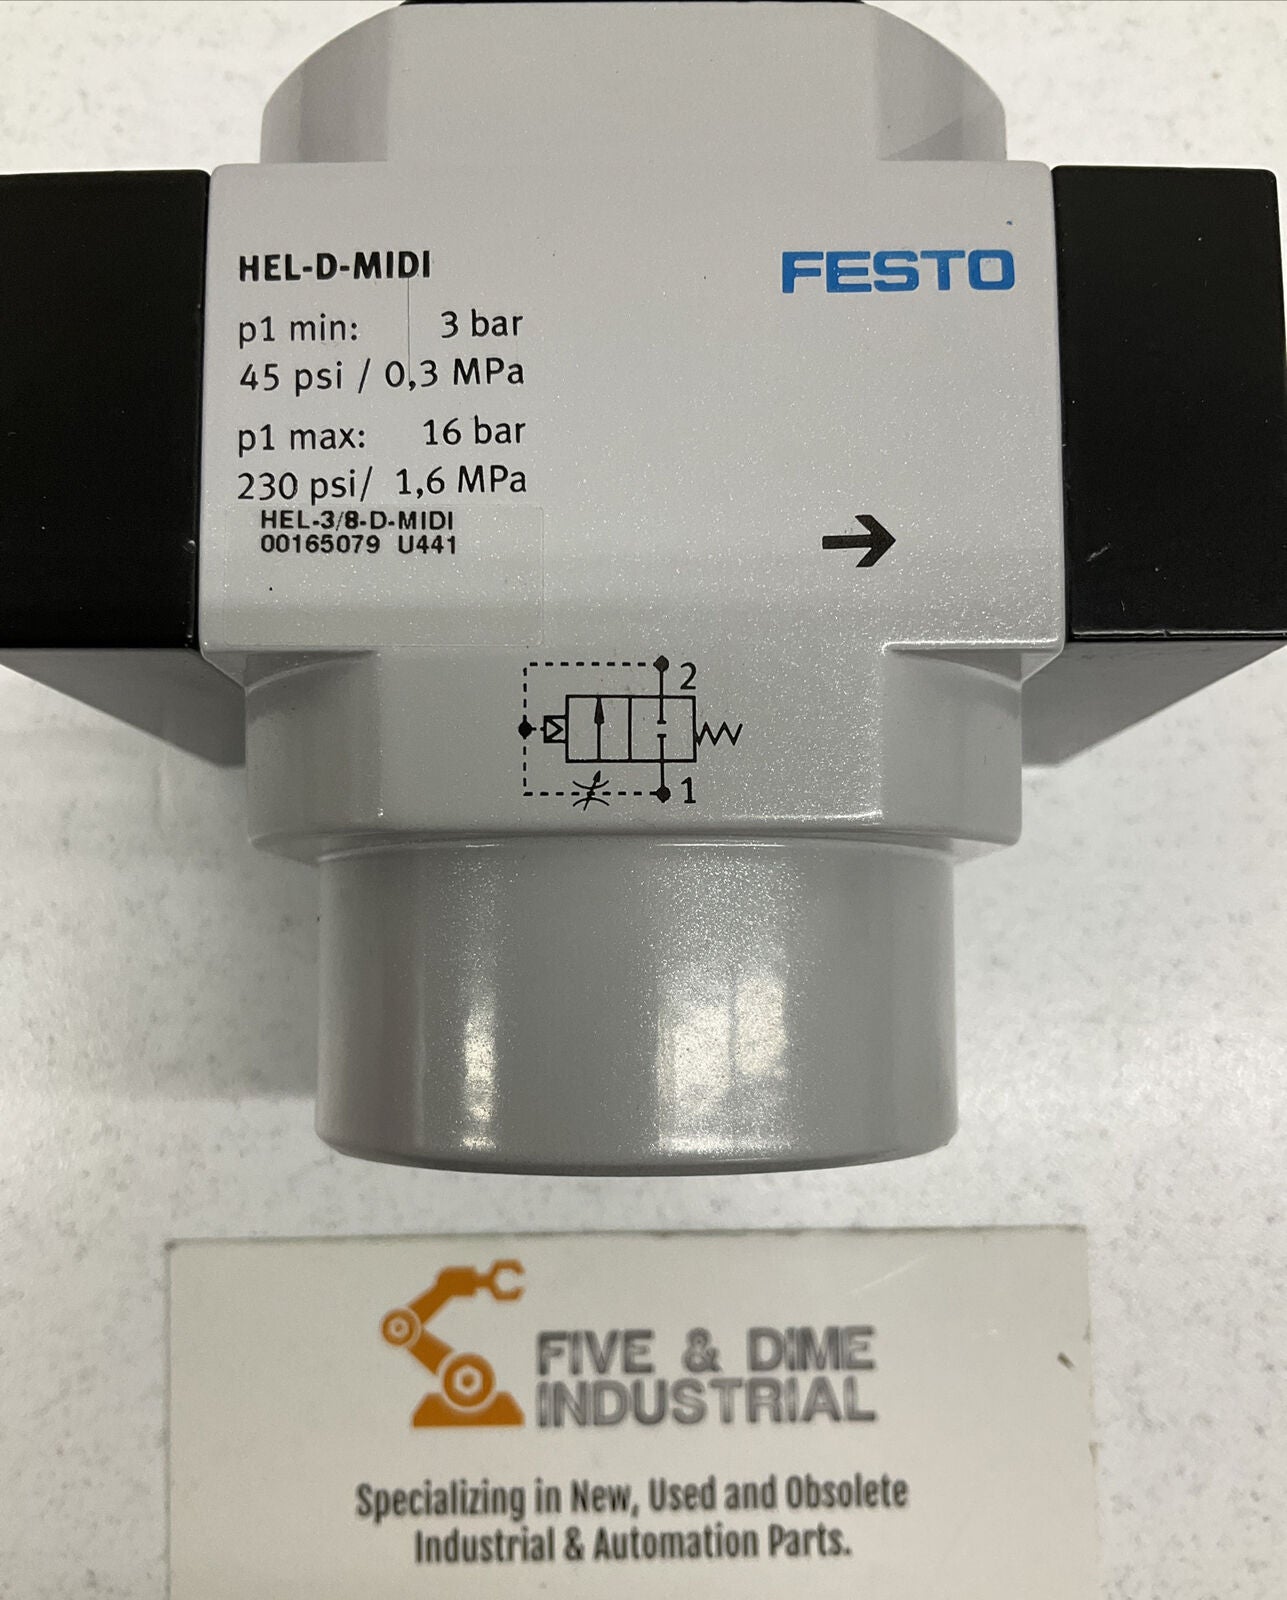 Festo Hel 3/8 D Midi New On Off Valve 3-16 bar 45-230 psi (RE239) - 0